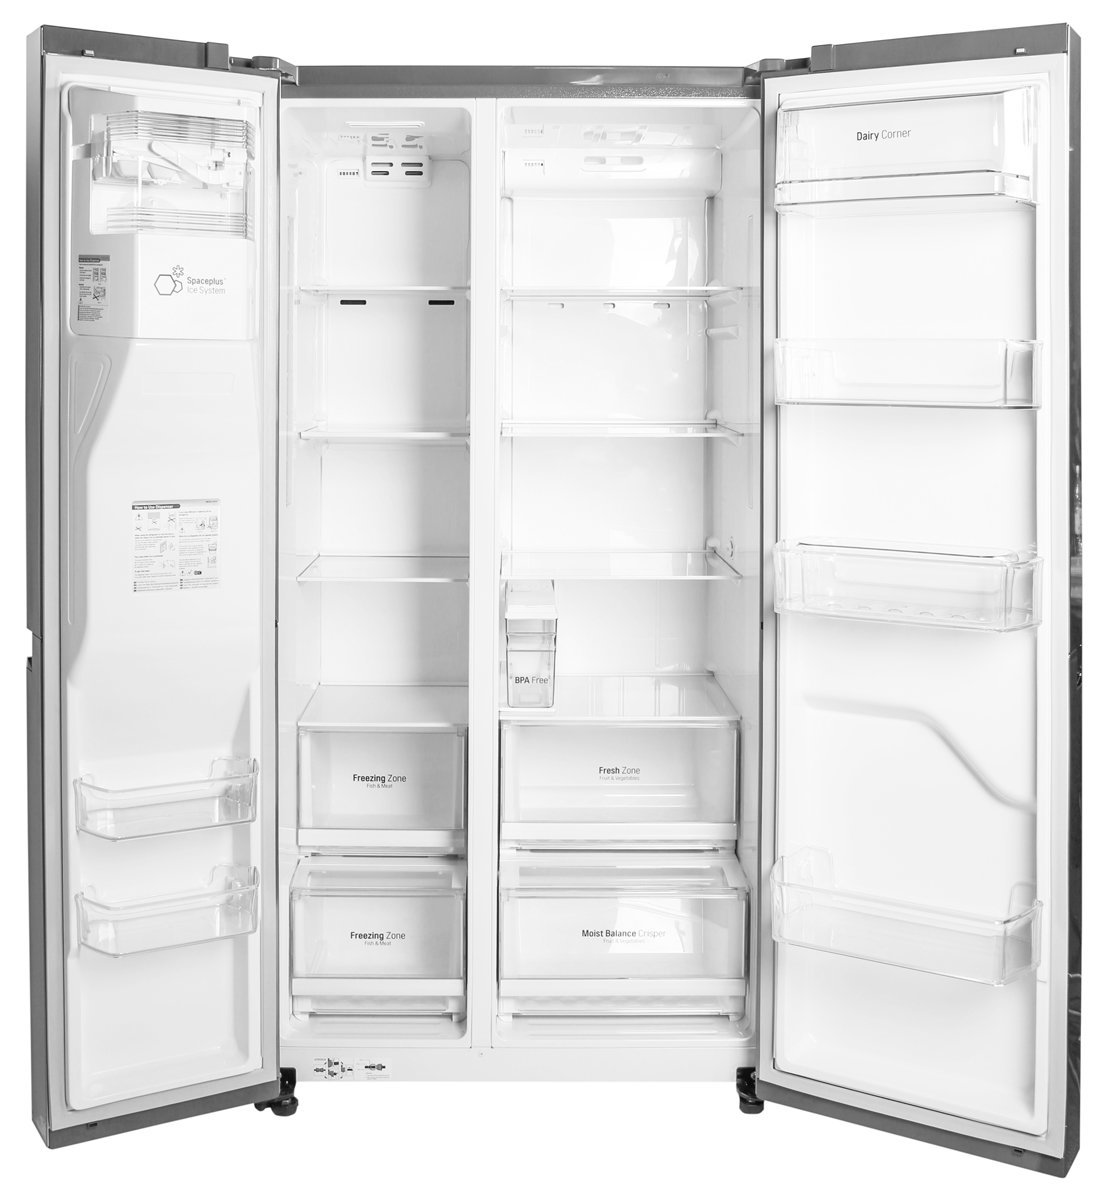 lg 668l side by side fridge review